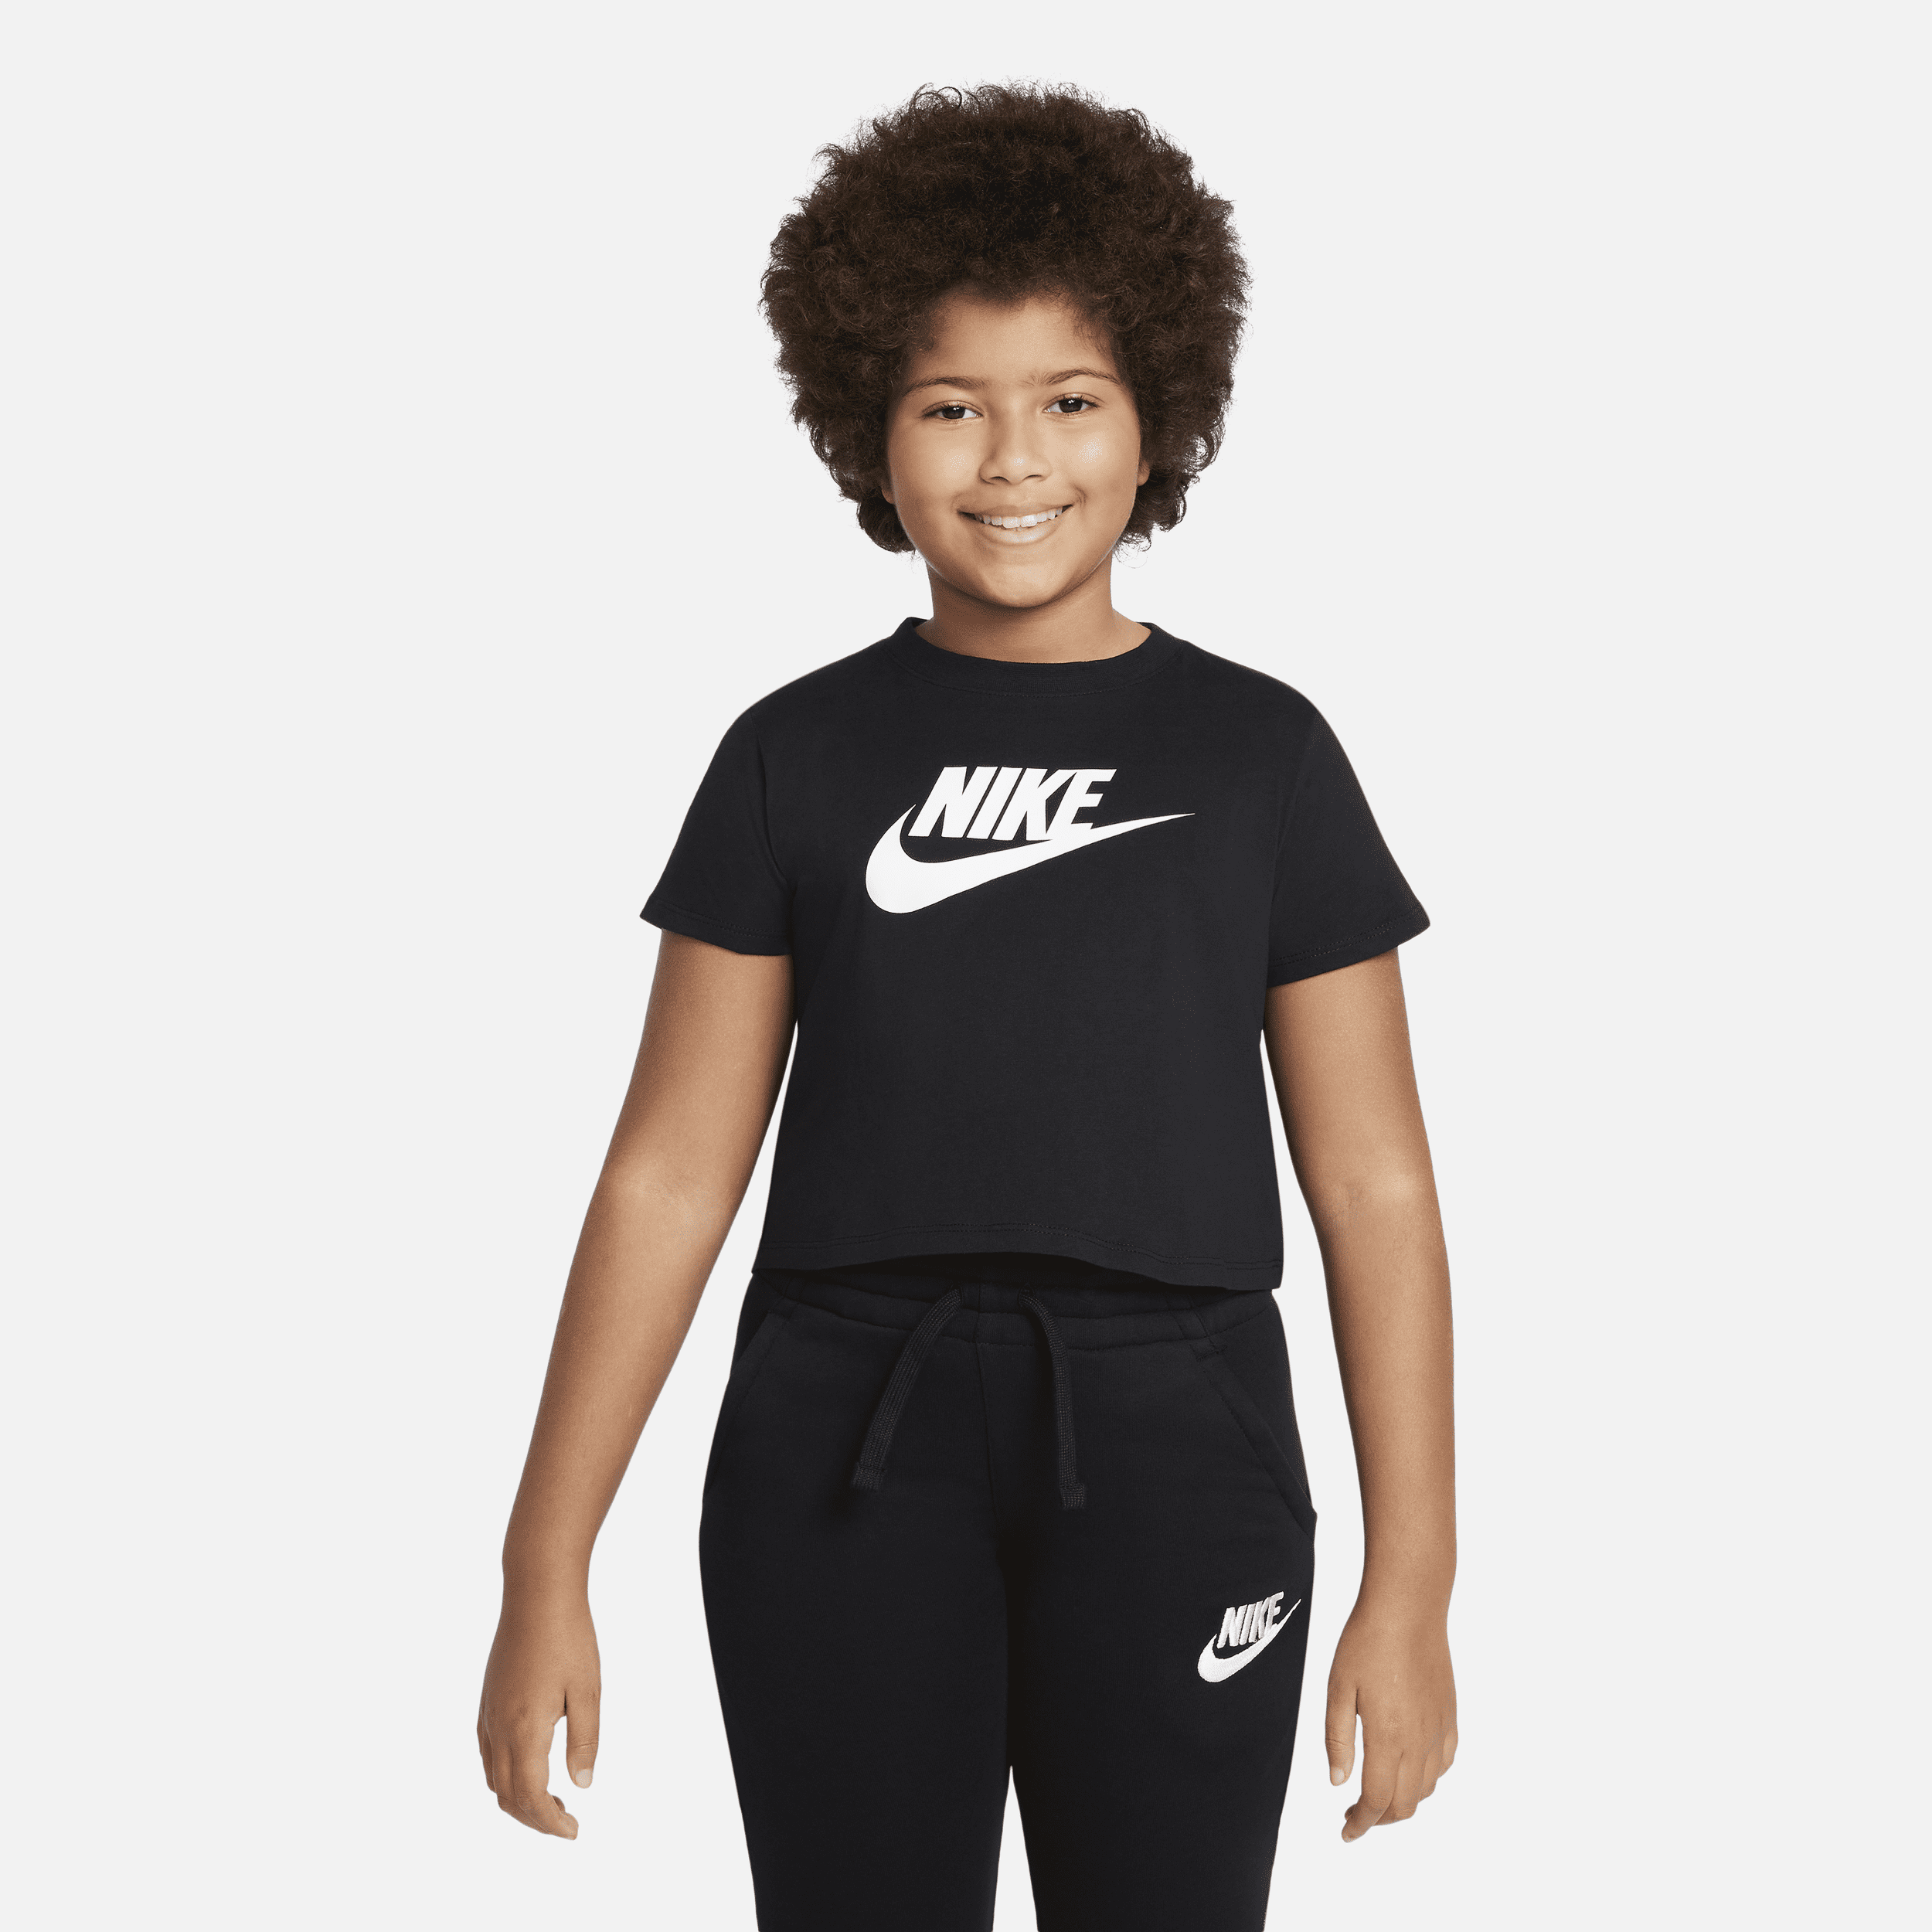 T-shirt ridotta Nike Sportswear - Ragazza - Nero